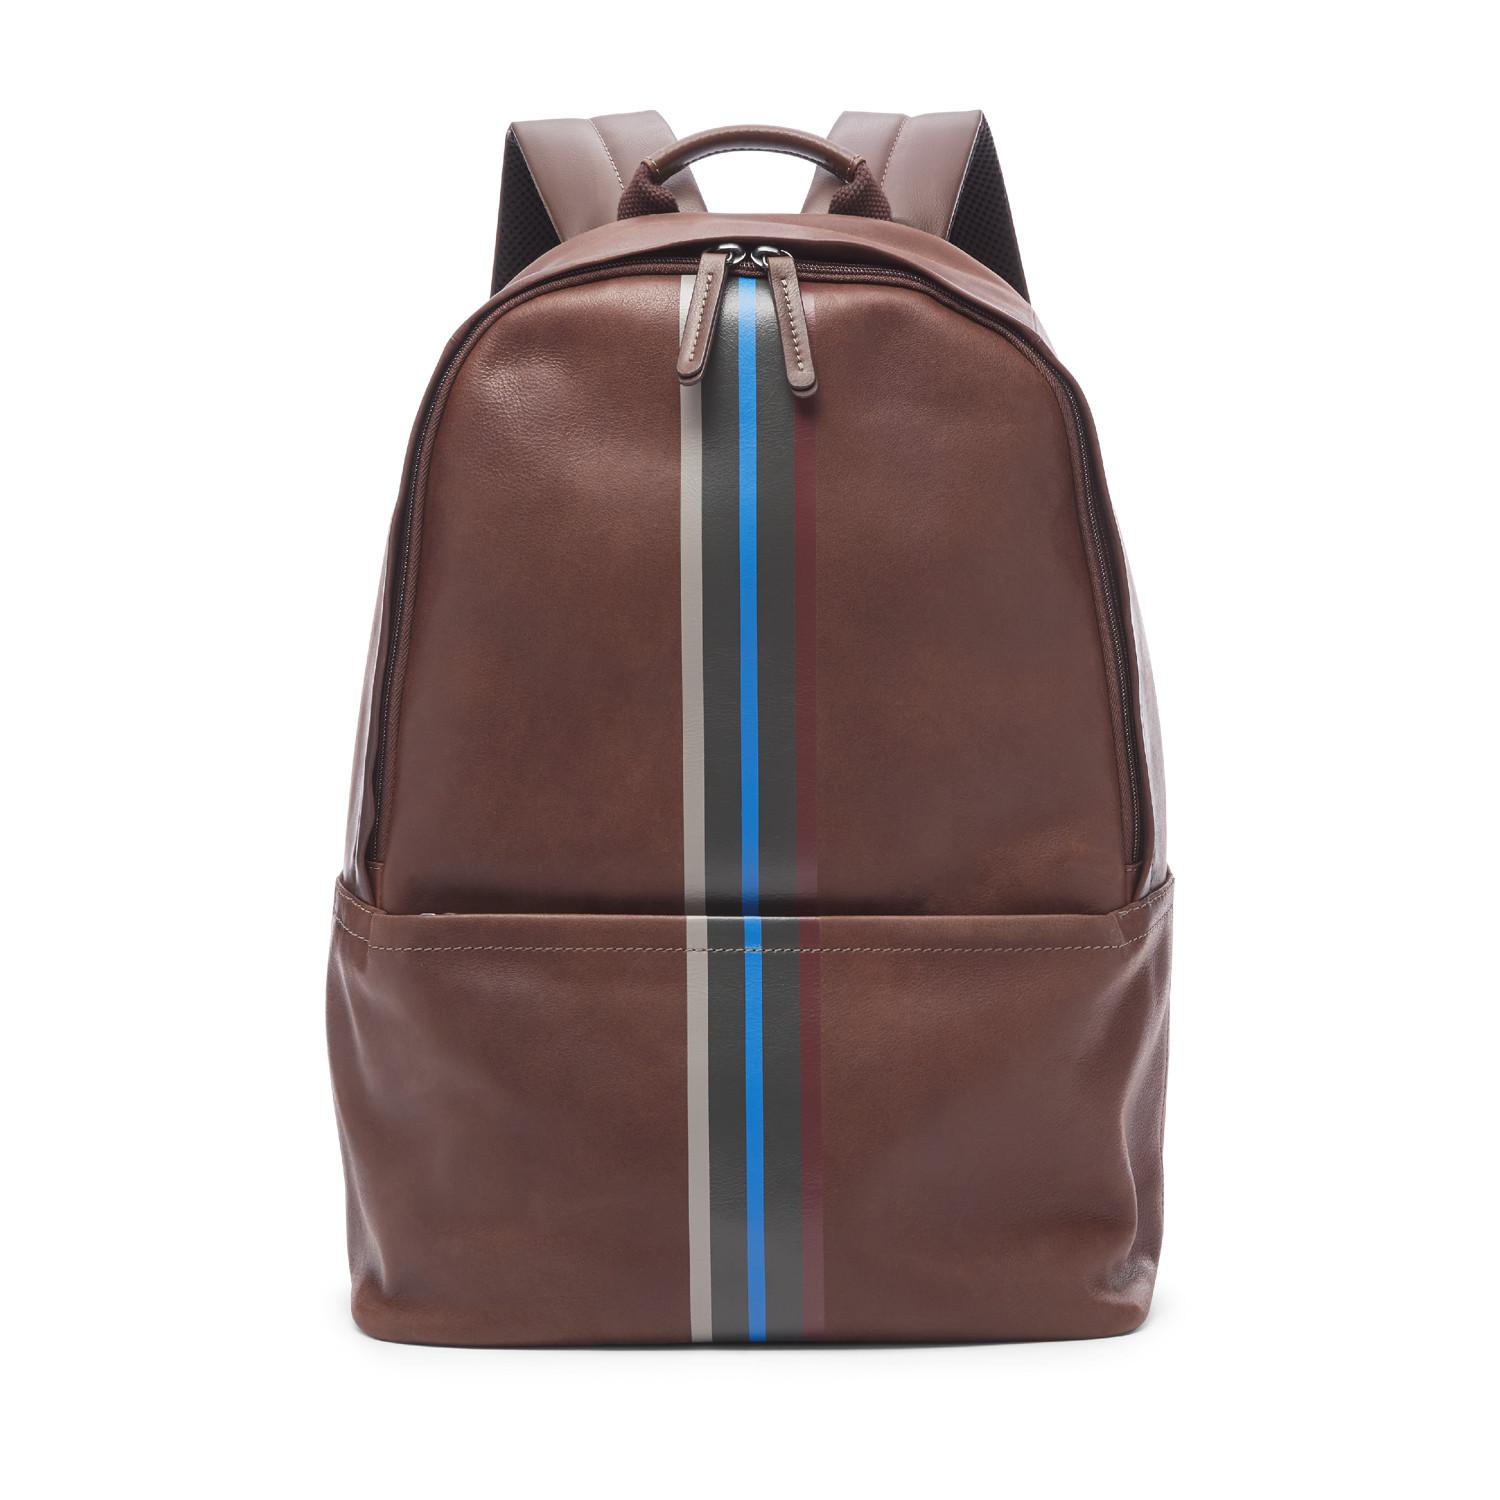 Fossil Kenton Backpack Bag Stripe in Brown for Men - Lyst